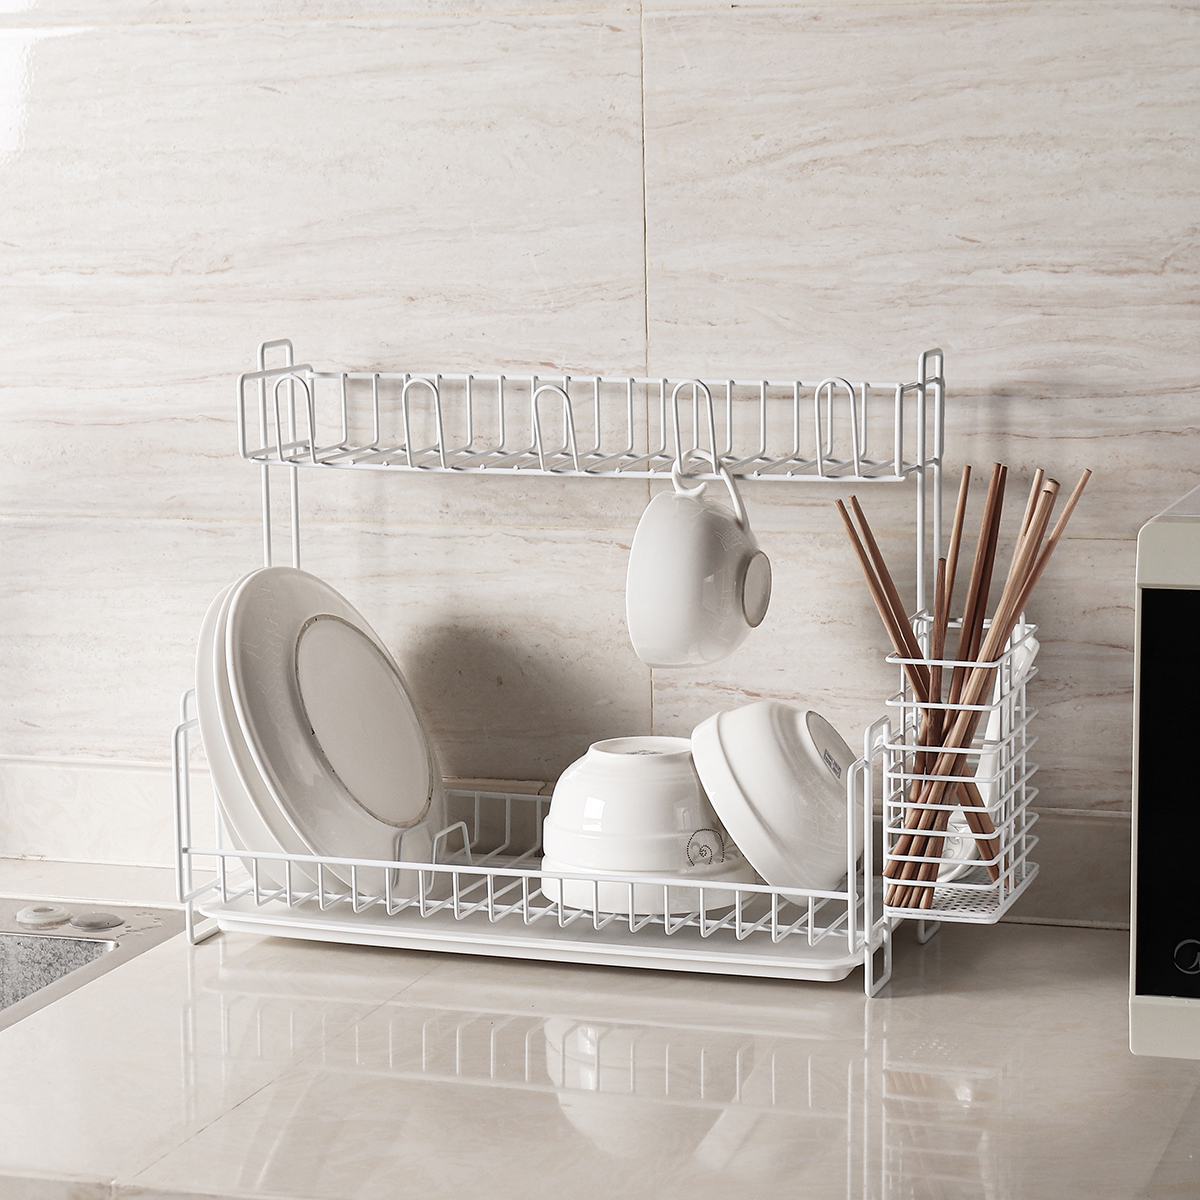 Dish-Drainer-Kitchen-Drying-Drain-Shelf-Sink-Holder-Cup-Bowl-Storage-Home-Basket-Stand-1608286-1